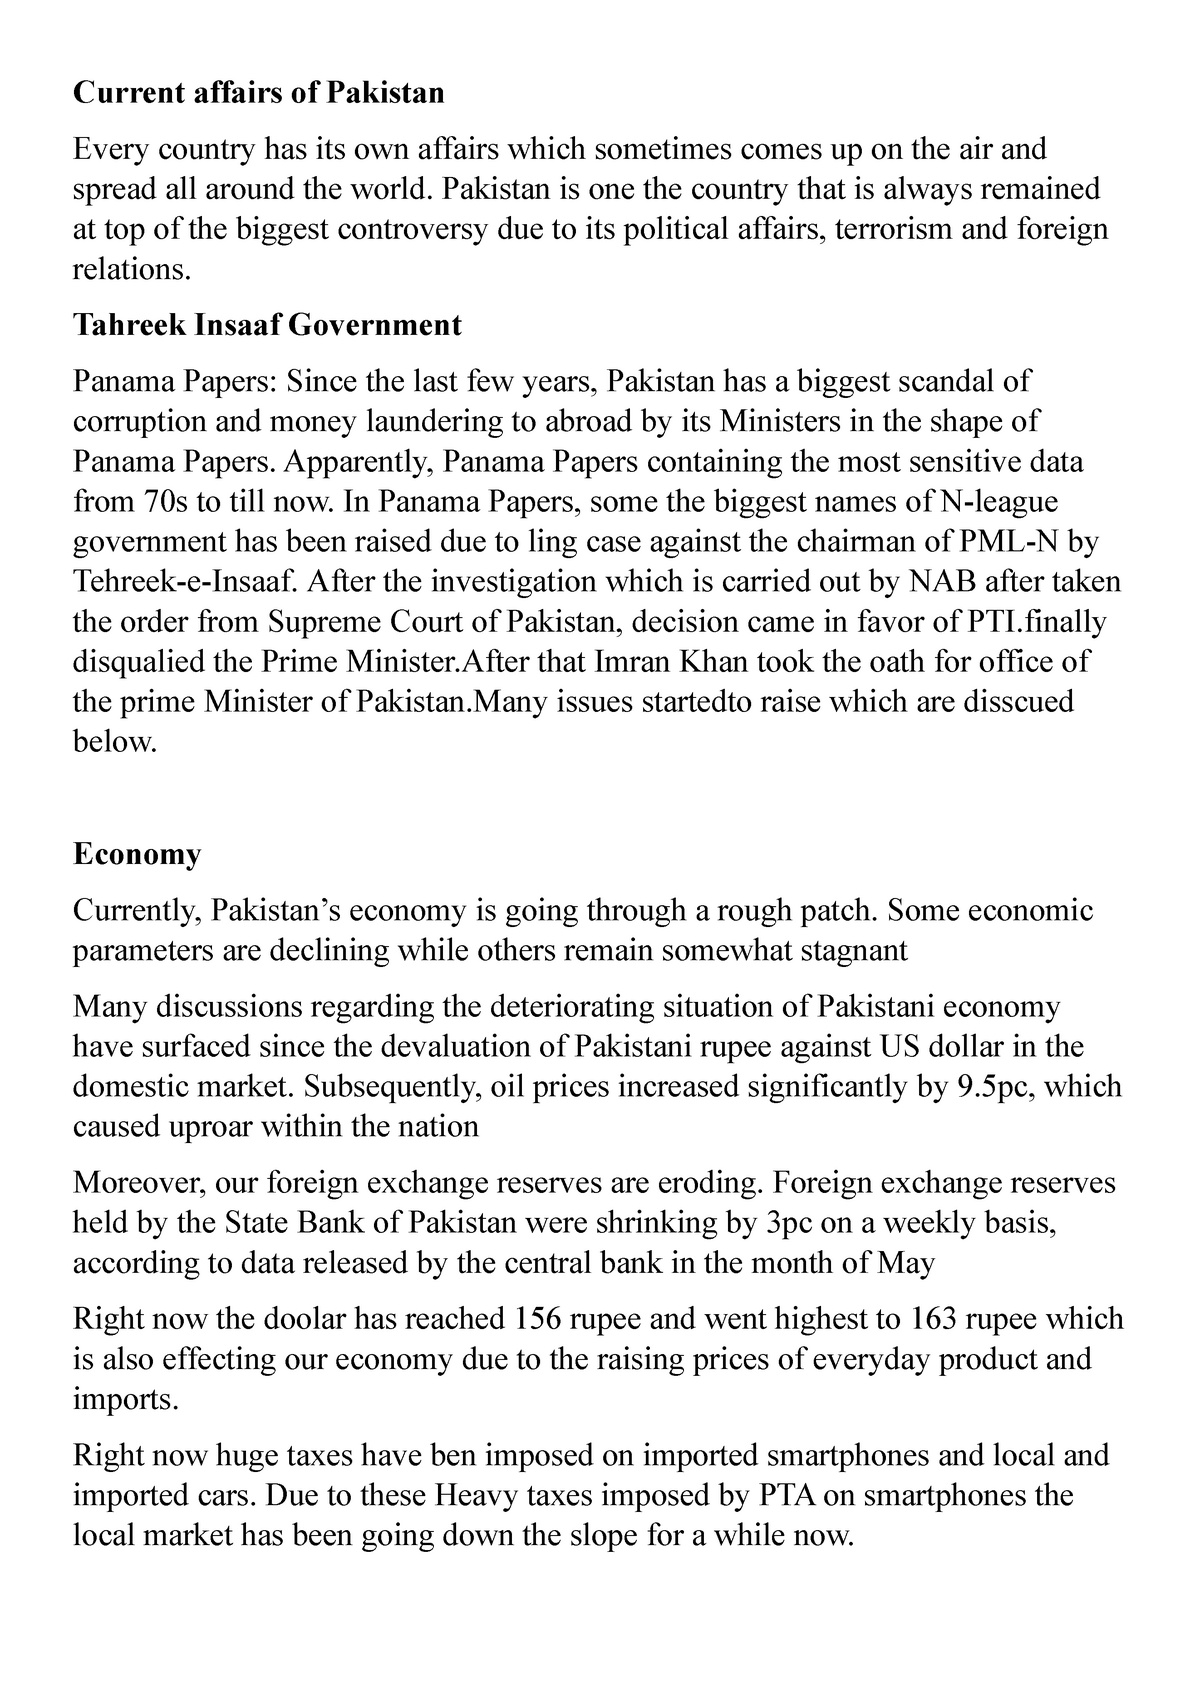 presentation topics on current affairs of pakistan